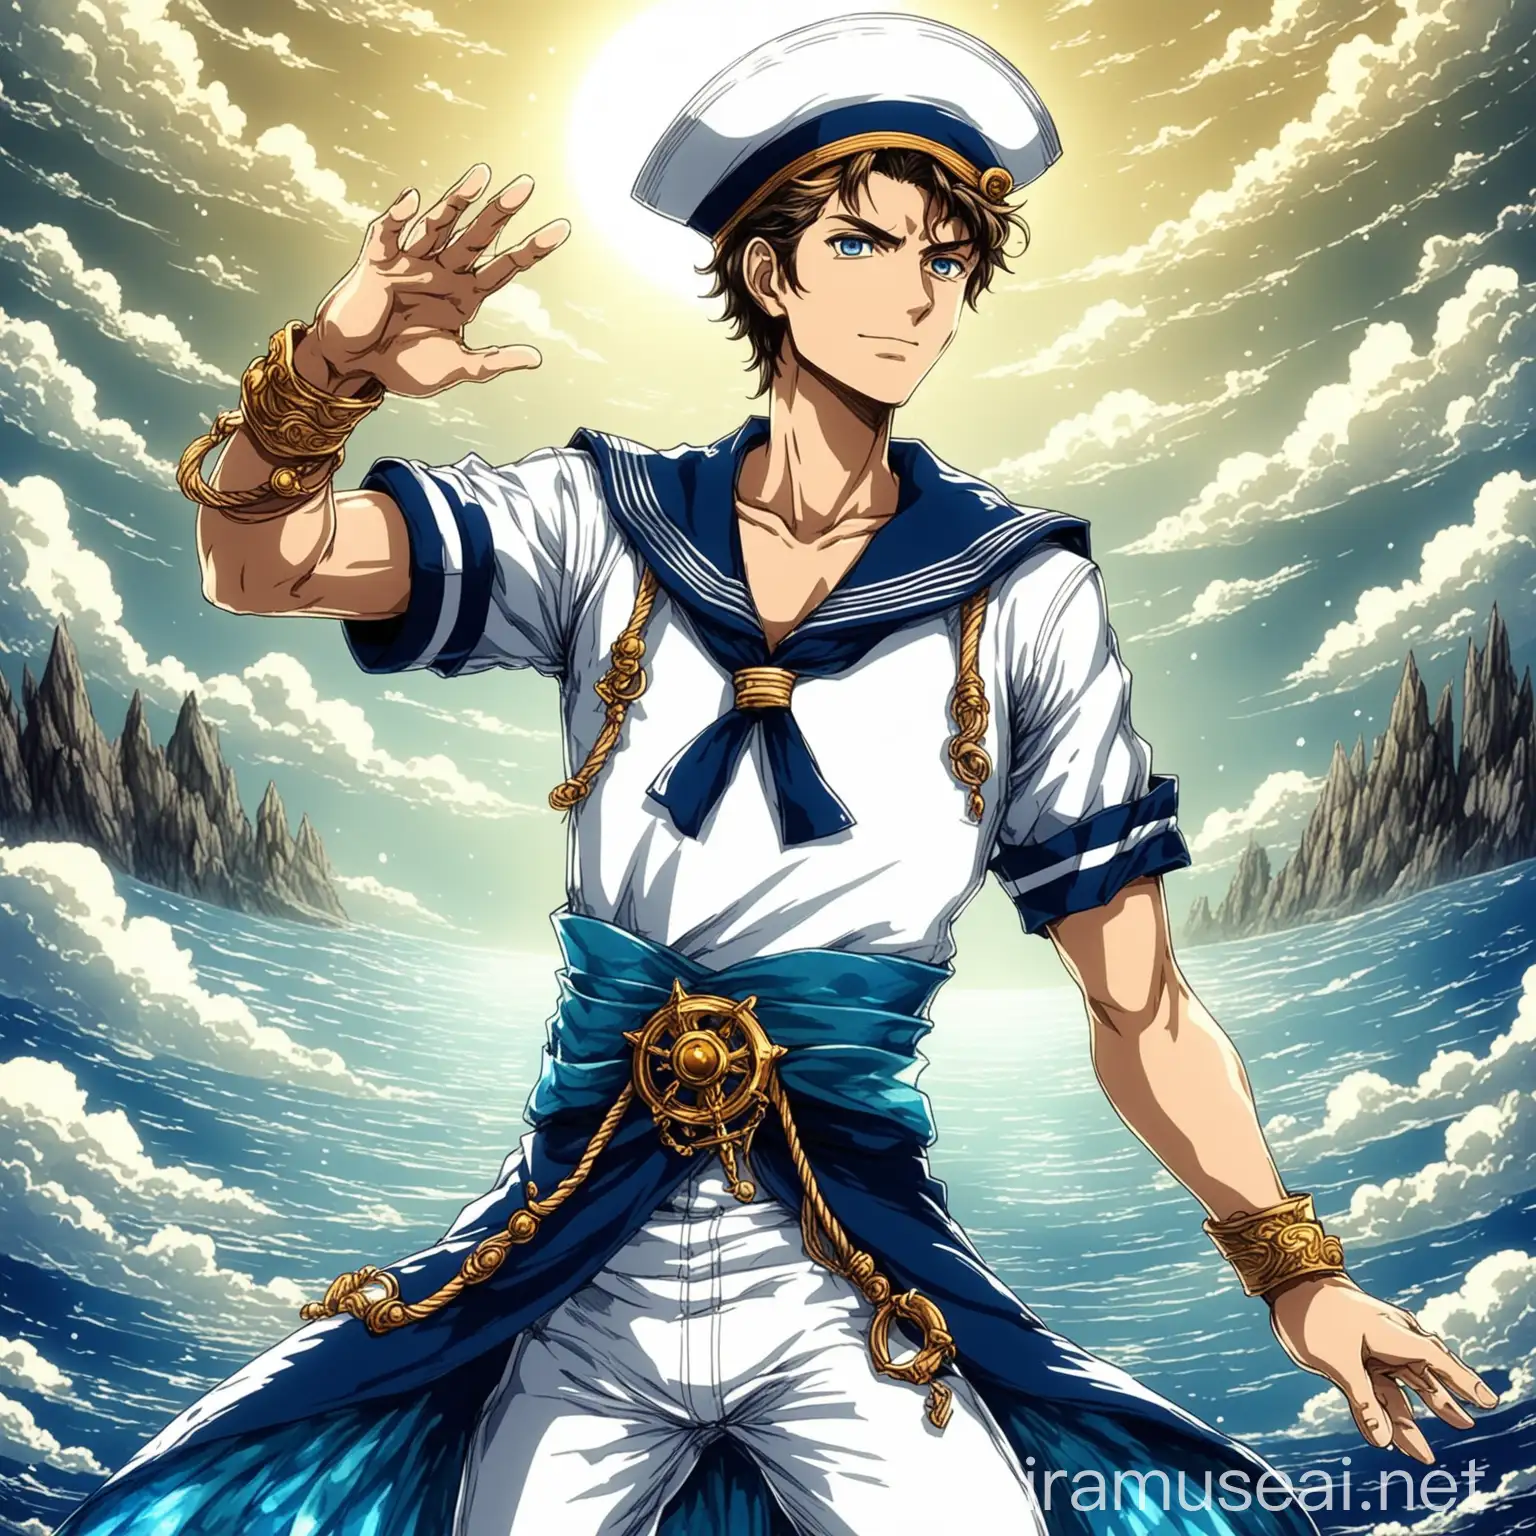 Fantasy Style Anime Sailor Man Character Design